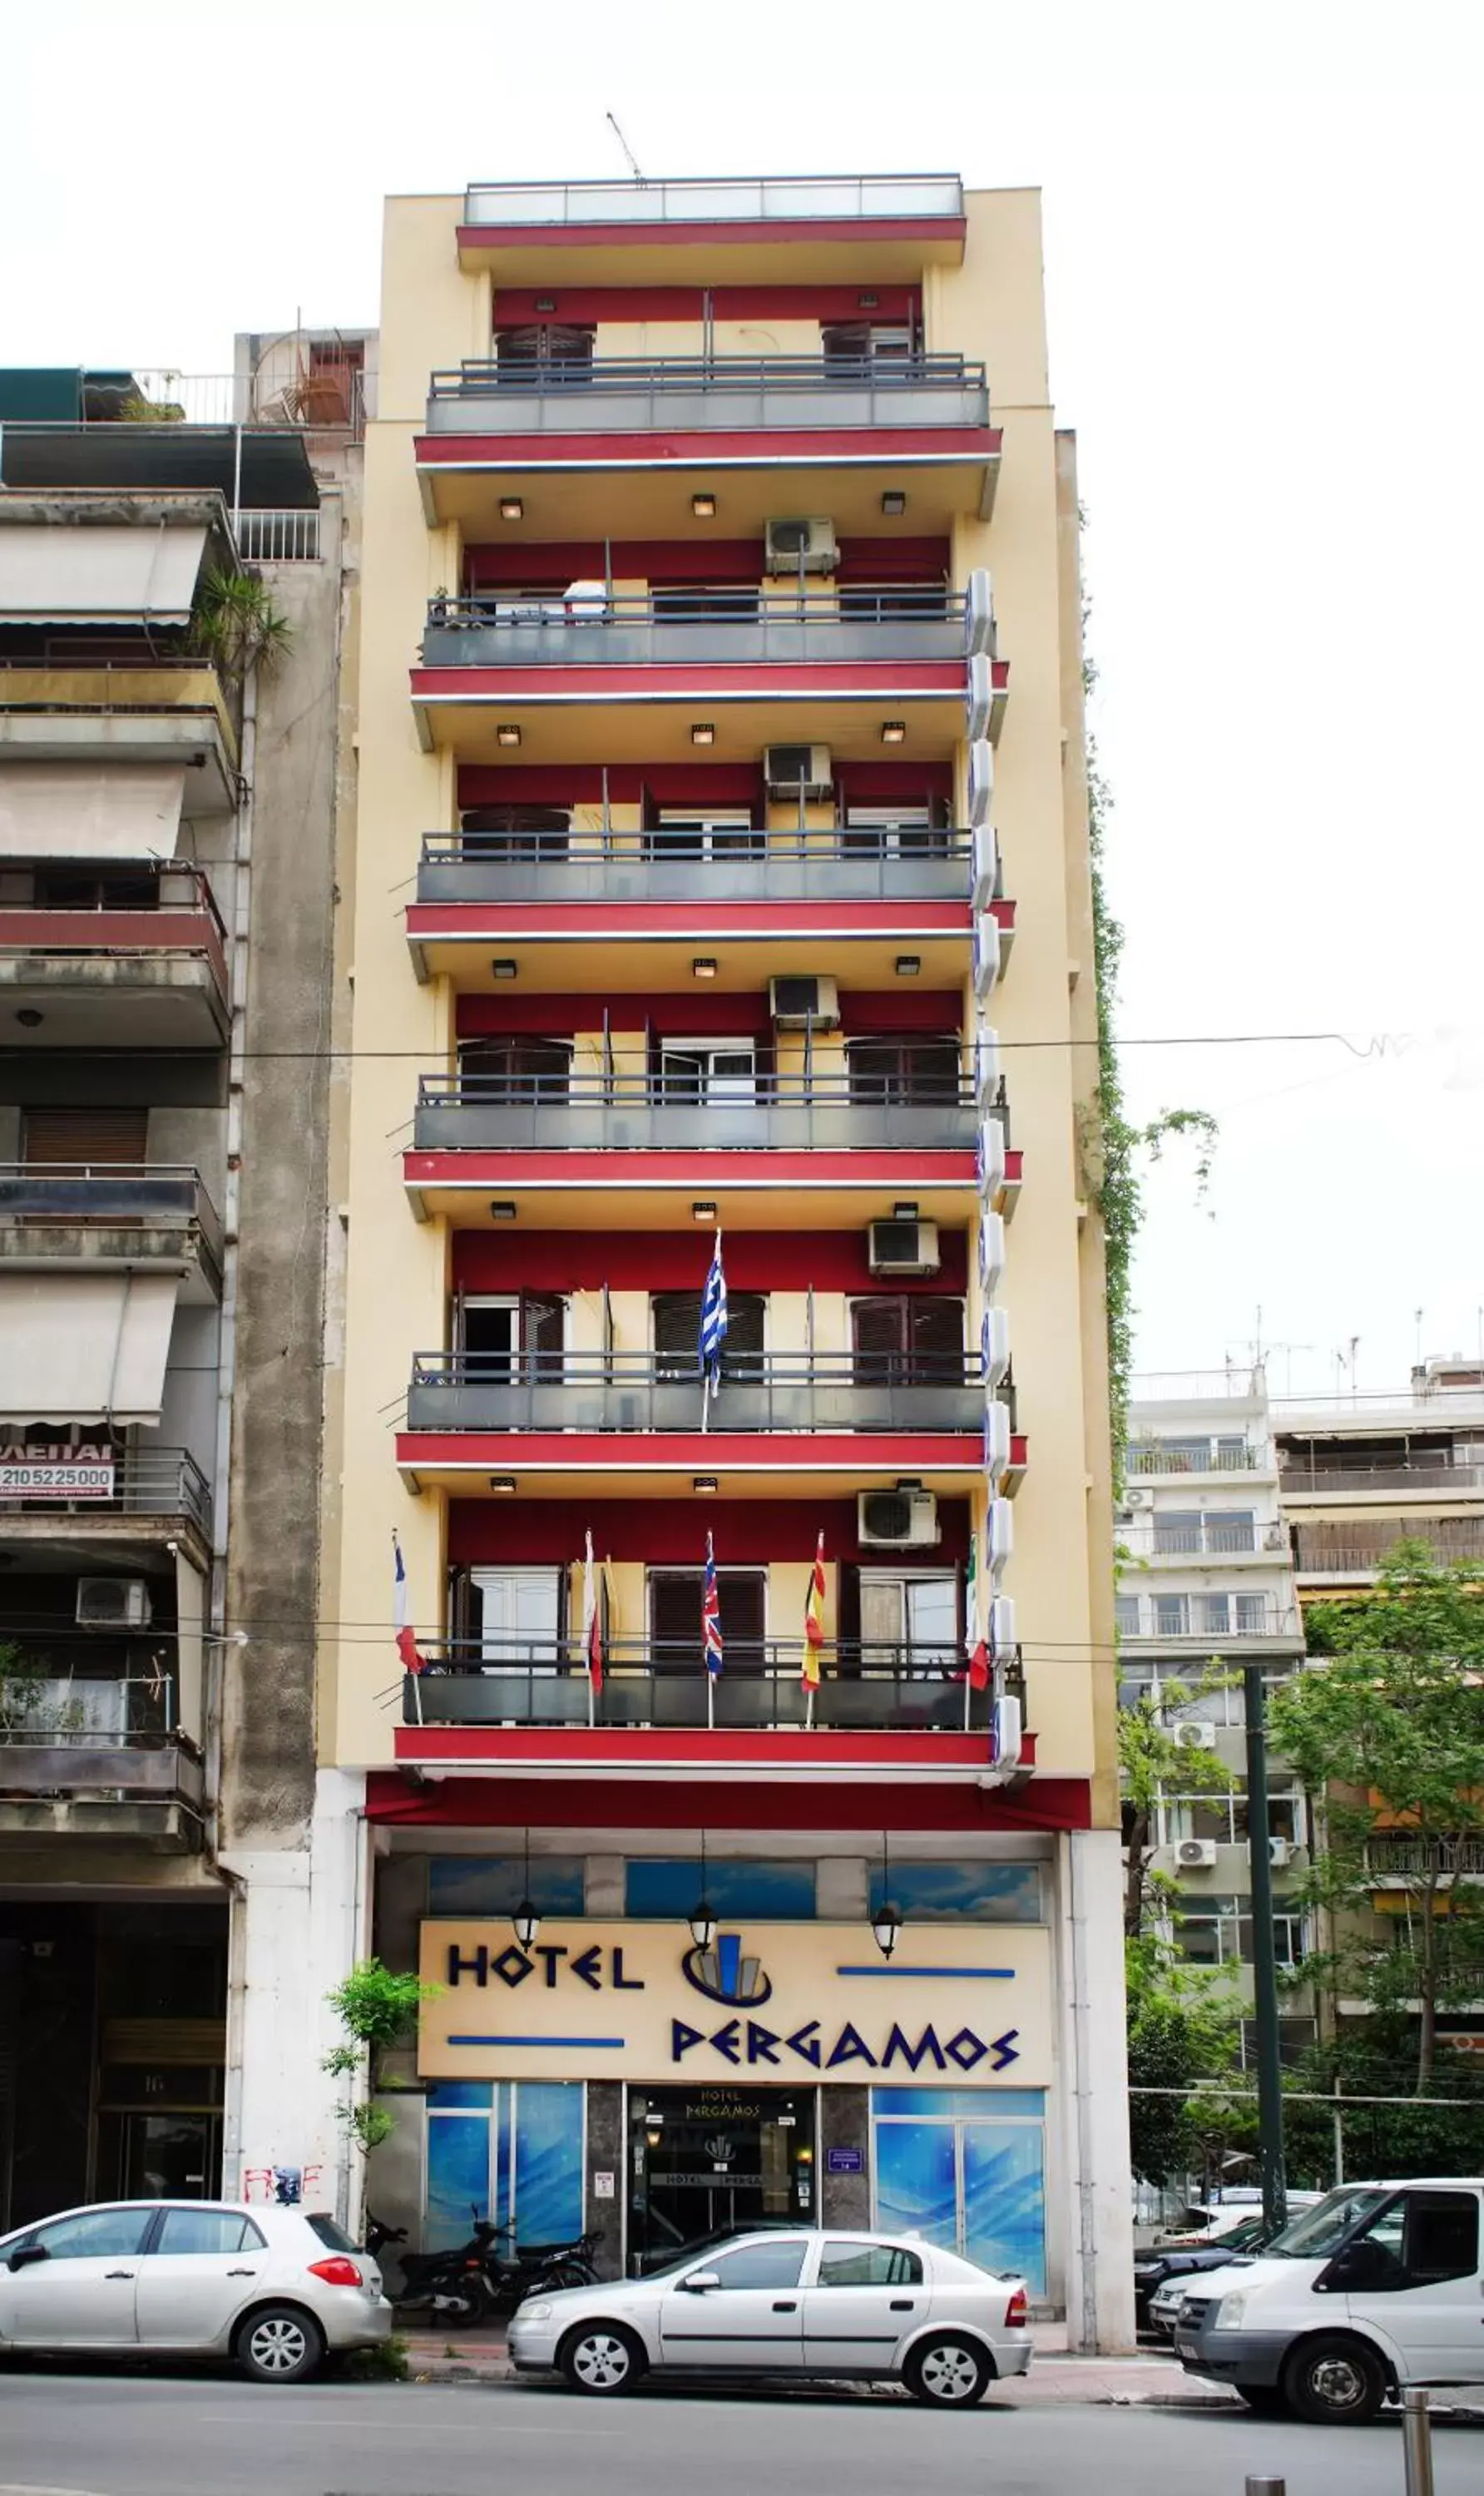 Property Building in Pergamos Hotel